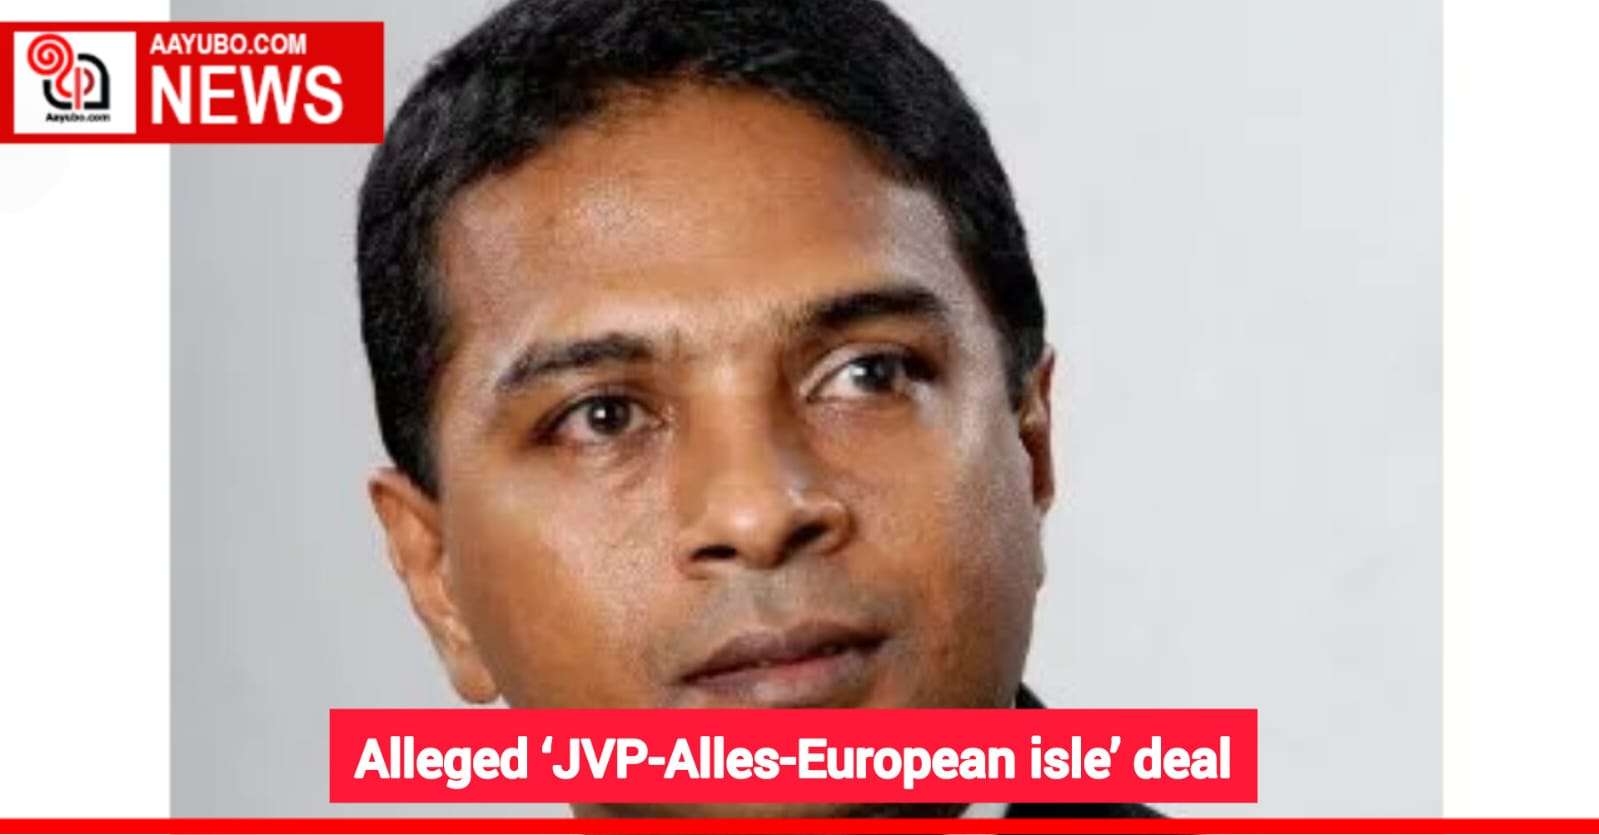 Alleged ‘JVP-Alles-European isle’ deal